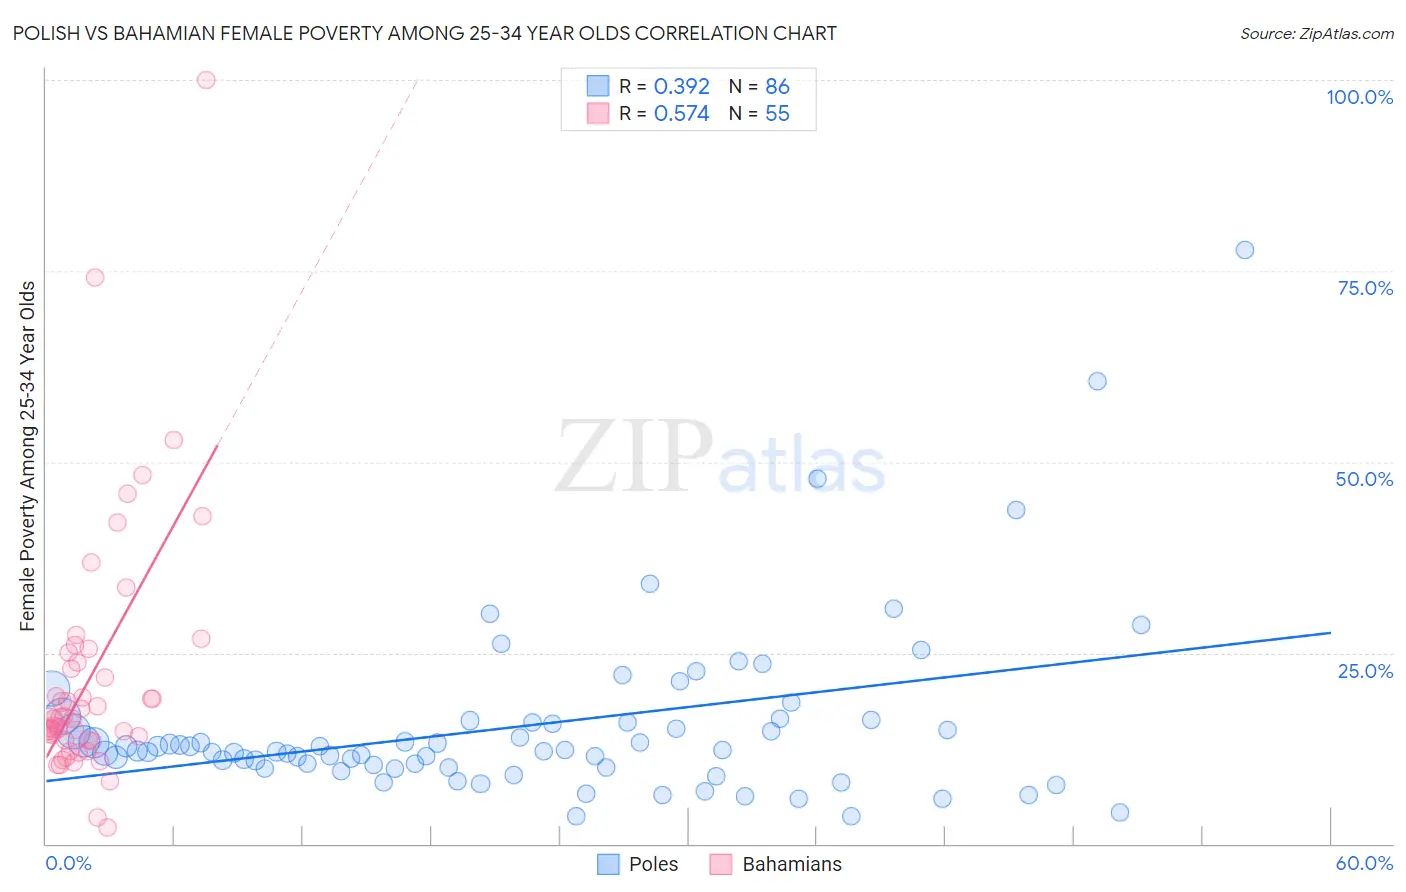 Polish vs Bahamian Female Poverty Among 25-34 Year Olds